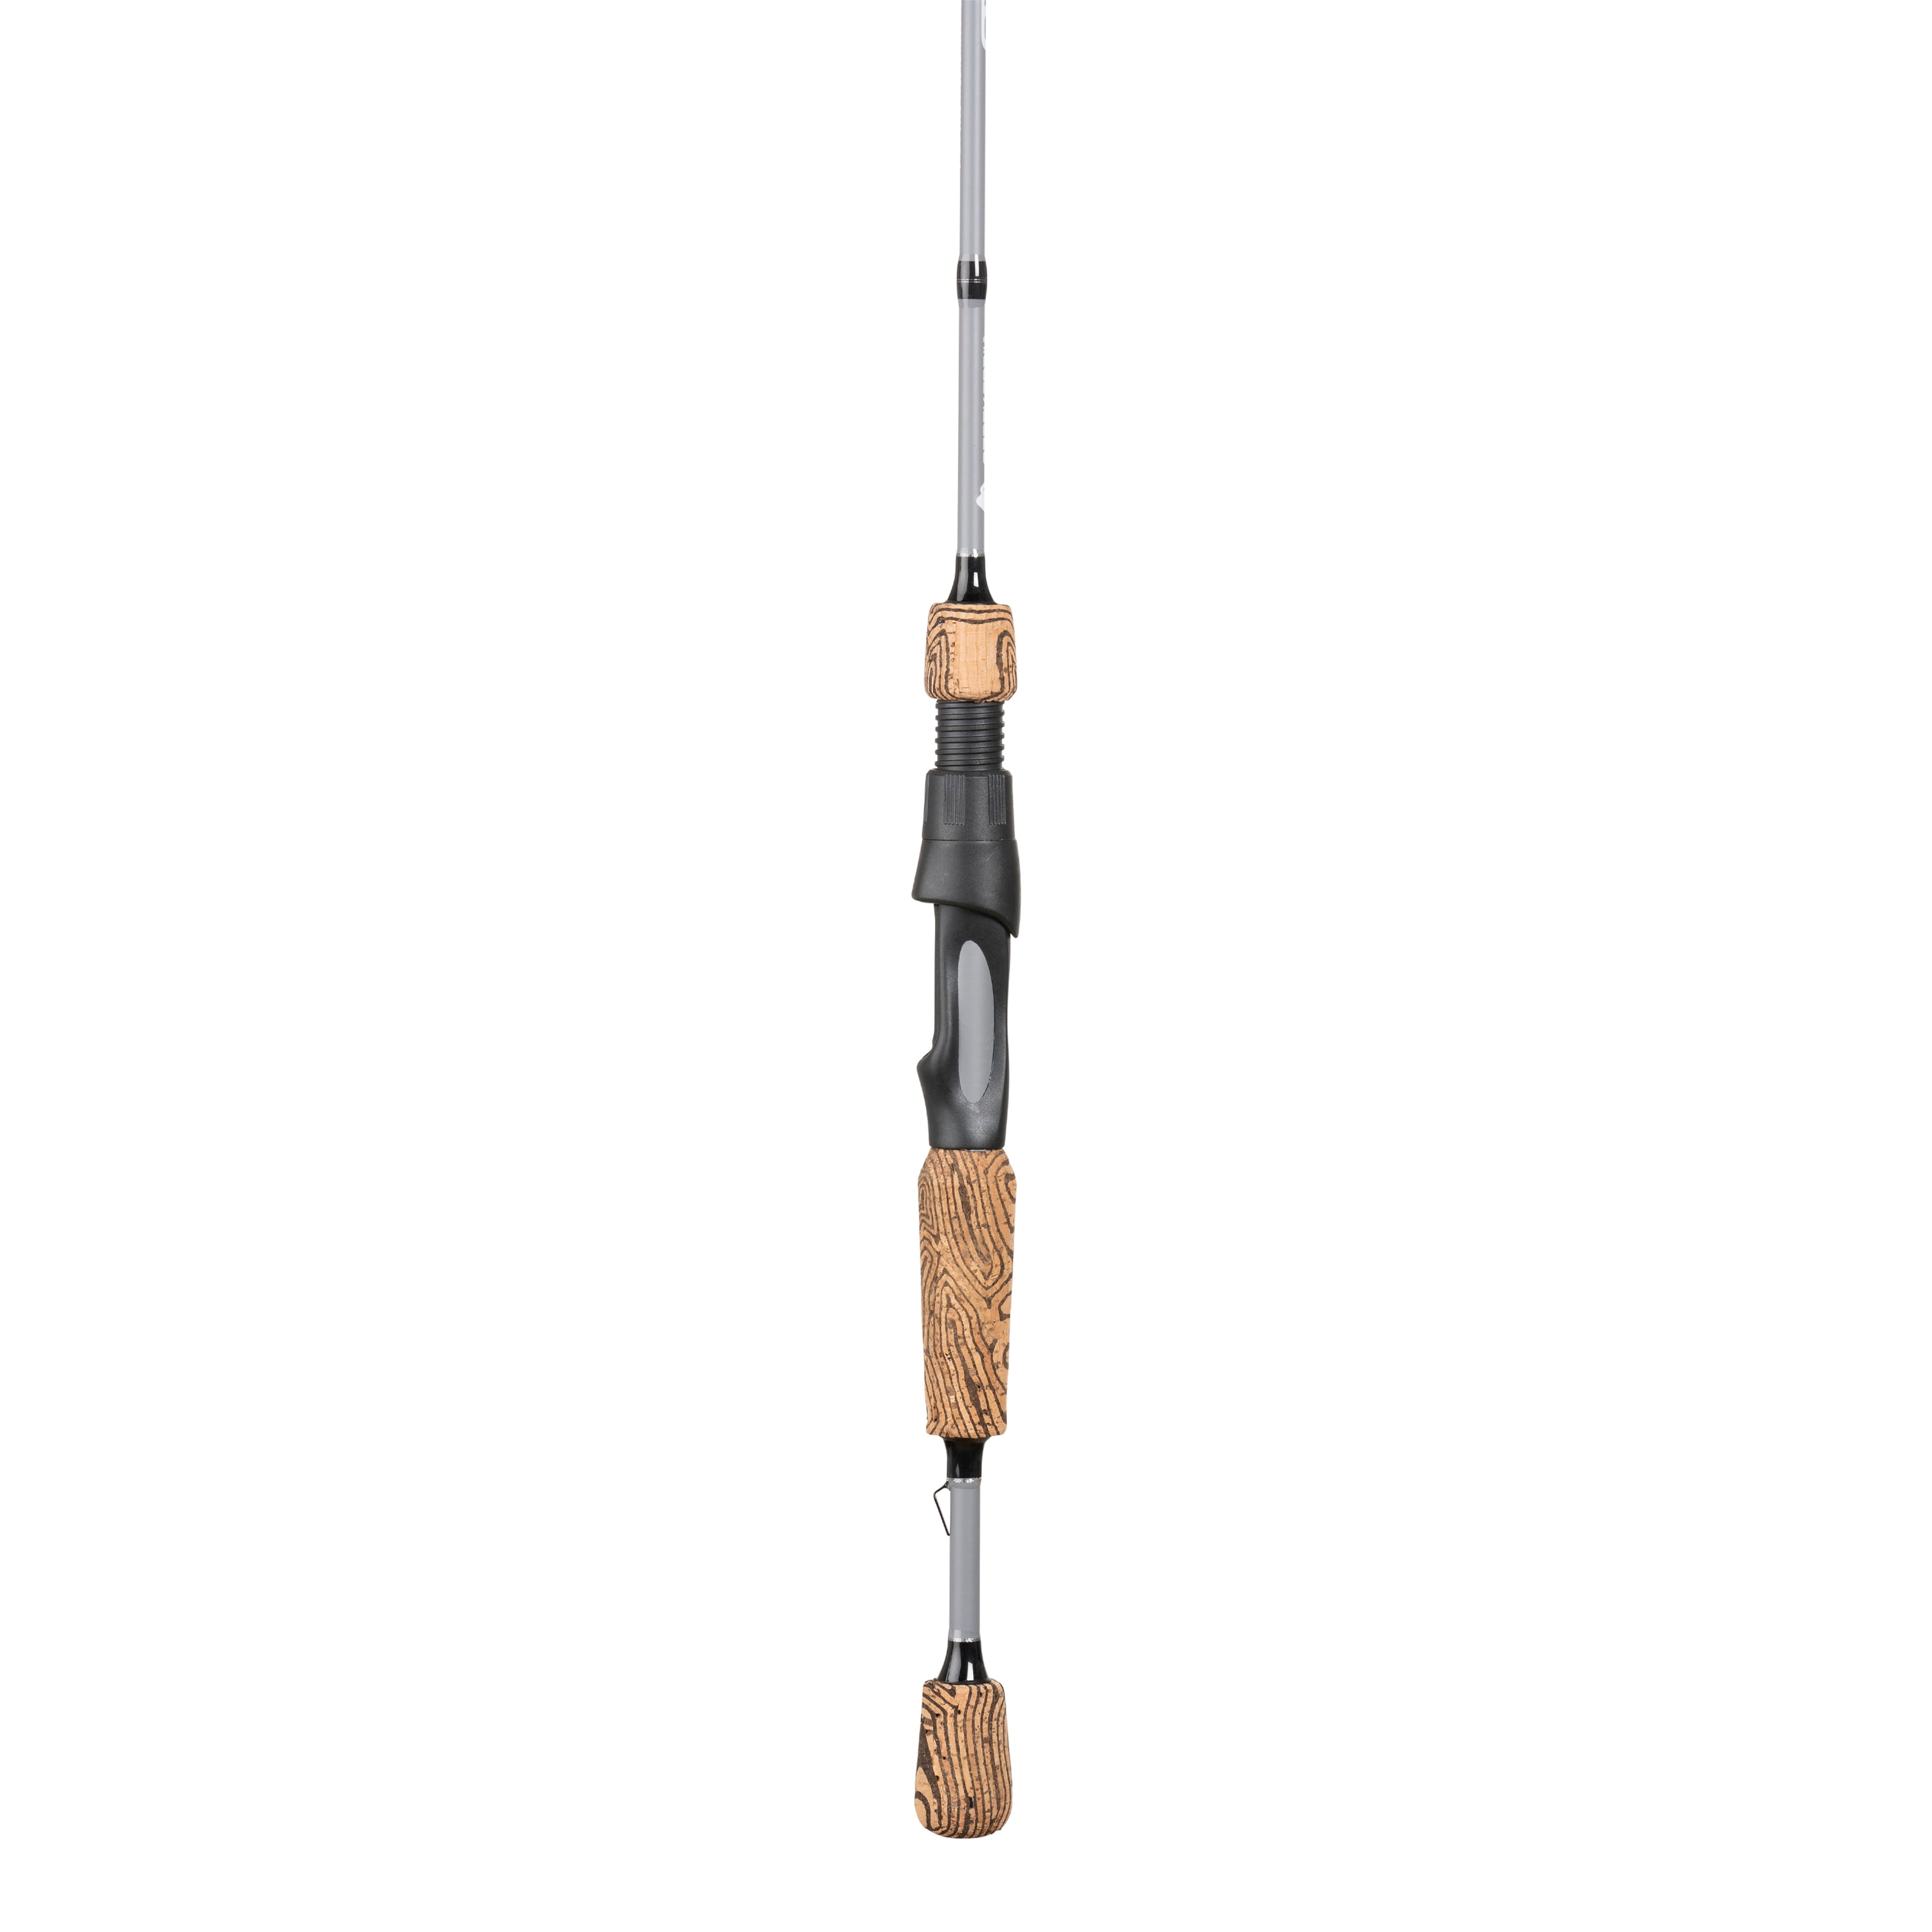 Ozark Trail OTX 6' 8 Baitcast, Medium Action, Fishing Rod 